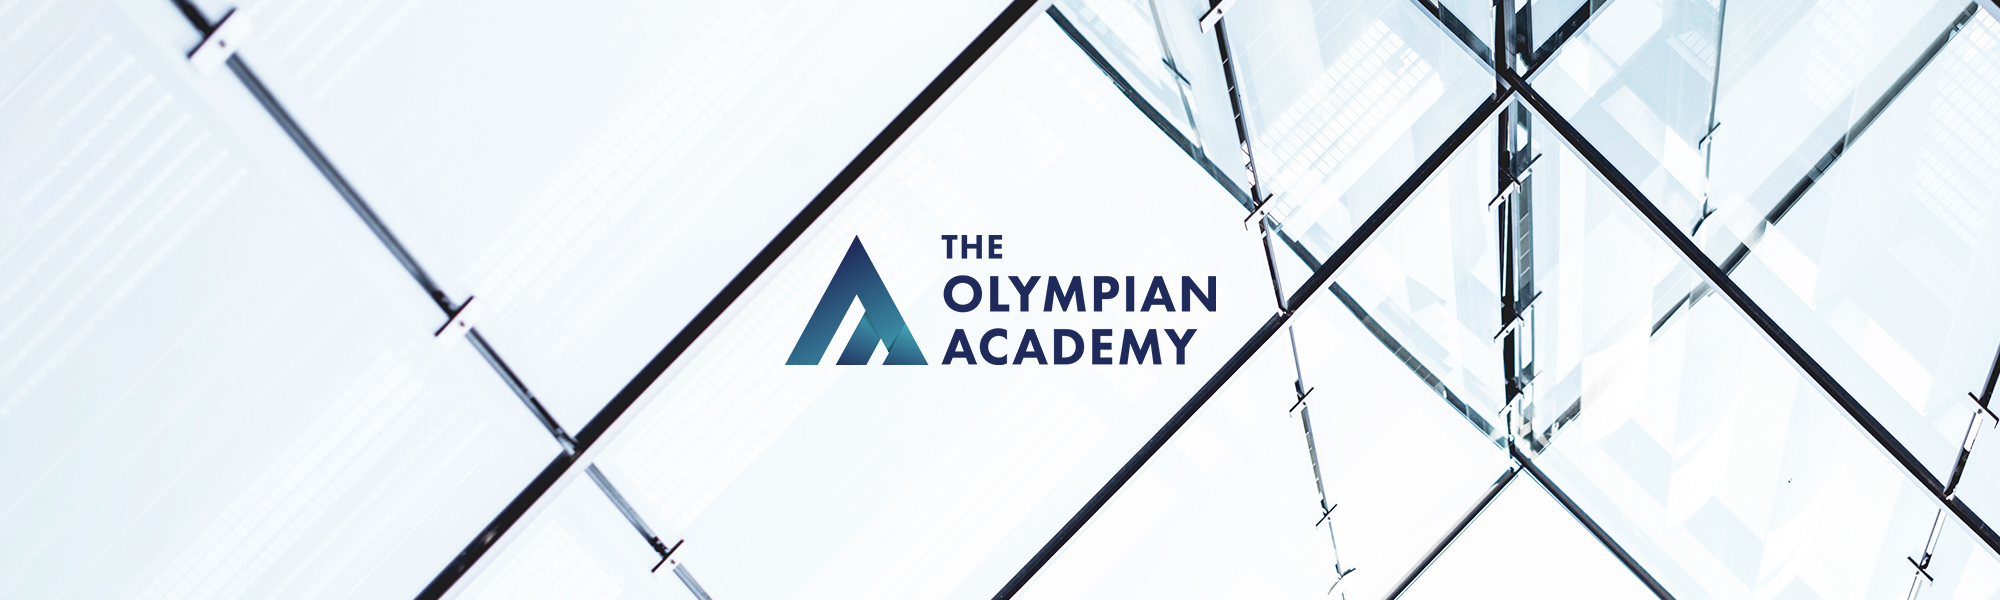 news-banner-introducing-olympian-academy